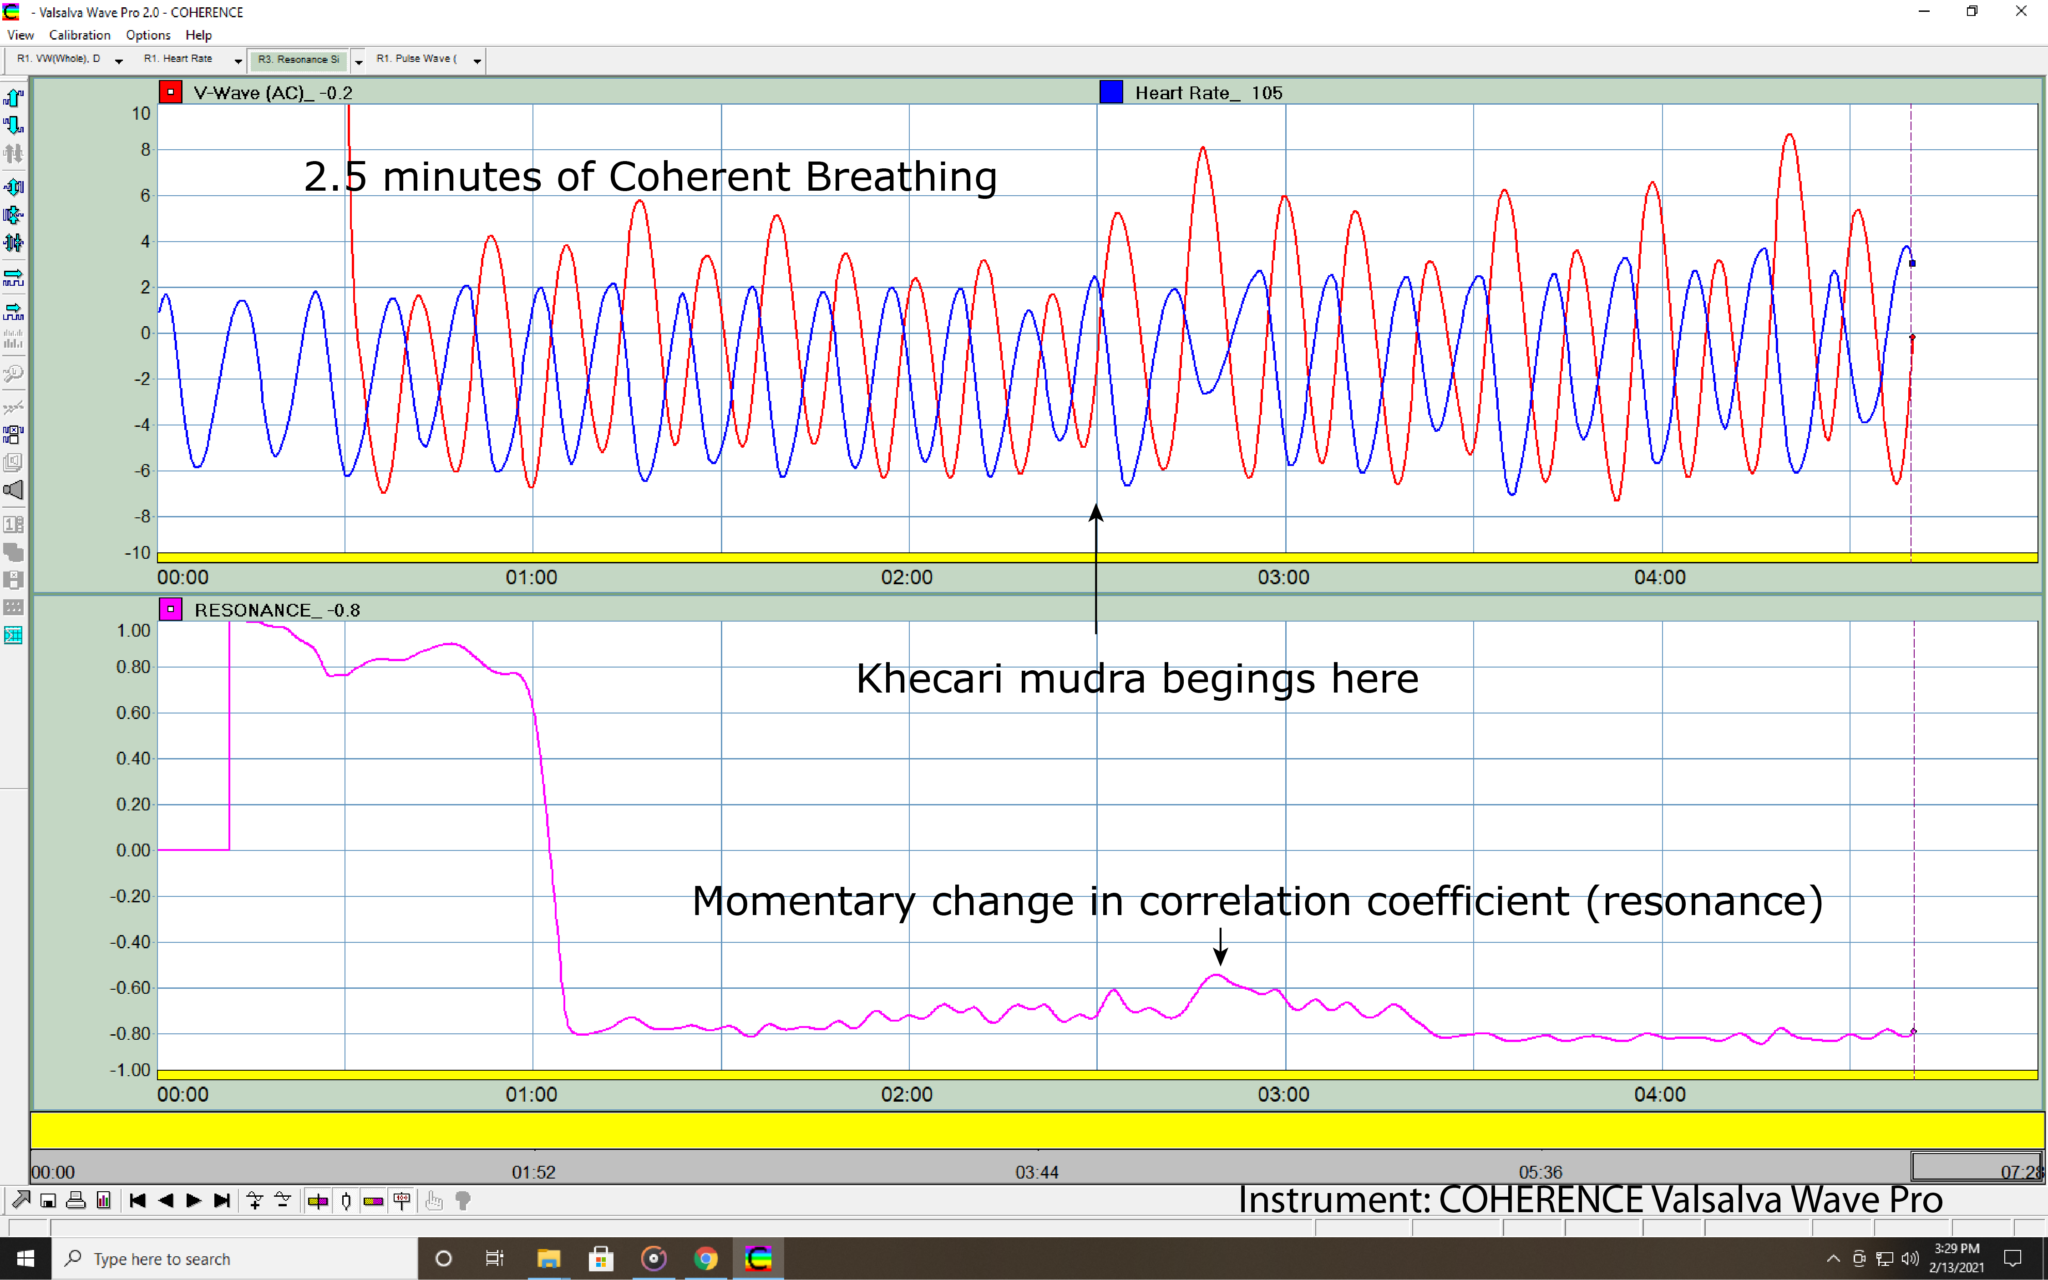 Coherent Breathing Followed By Khechari Mudra